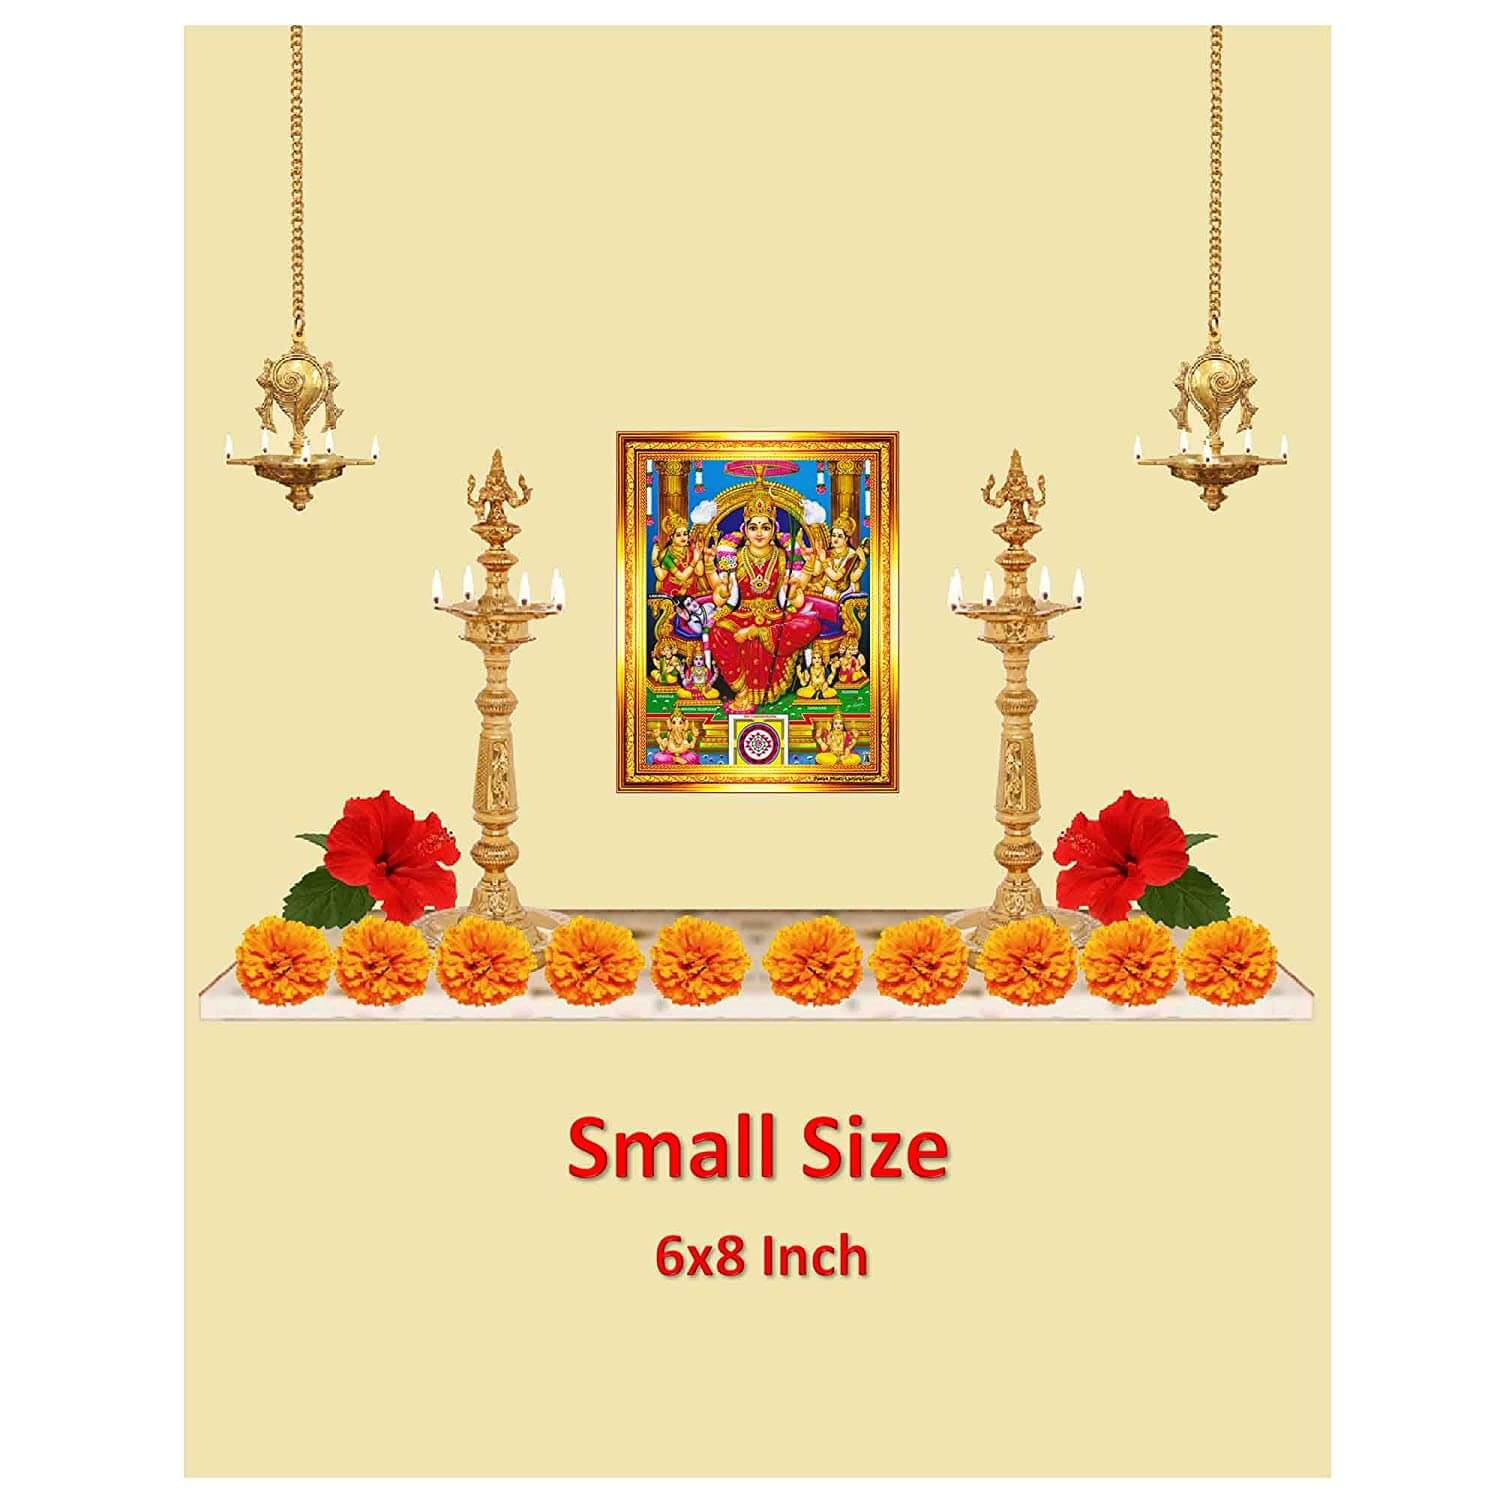 Sri Raja Rajeshwari Devi Lalita Tripura Sundari Amman Photo Frame (Golden Color, Small Size 6x8 Inch) Mangal Fashions | Indian Home Decor and Craft